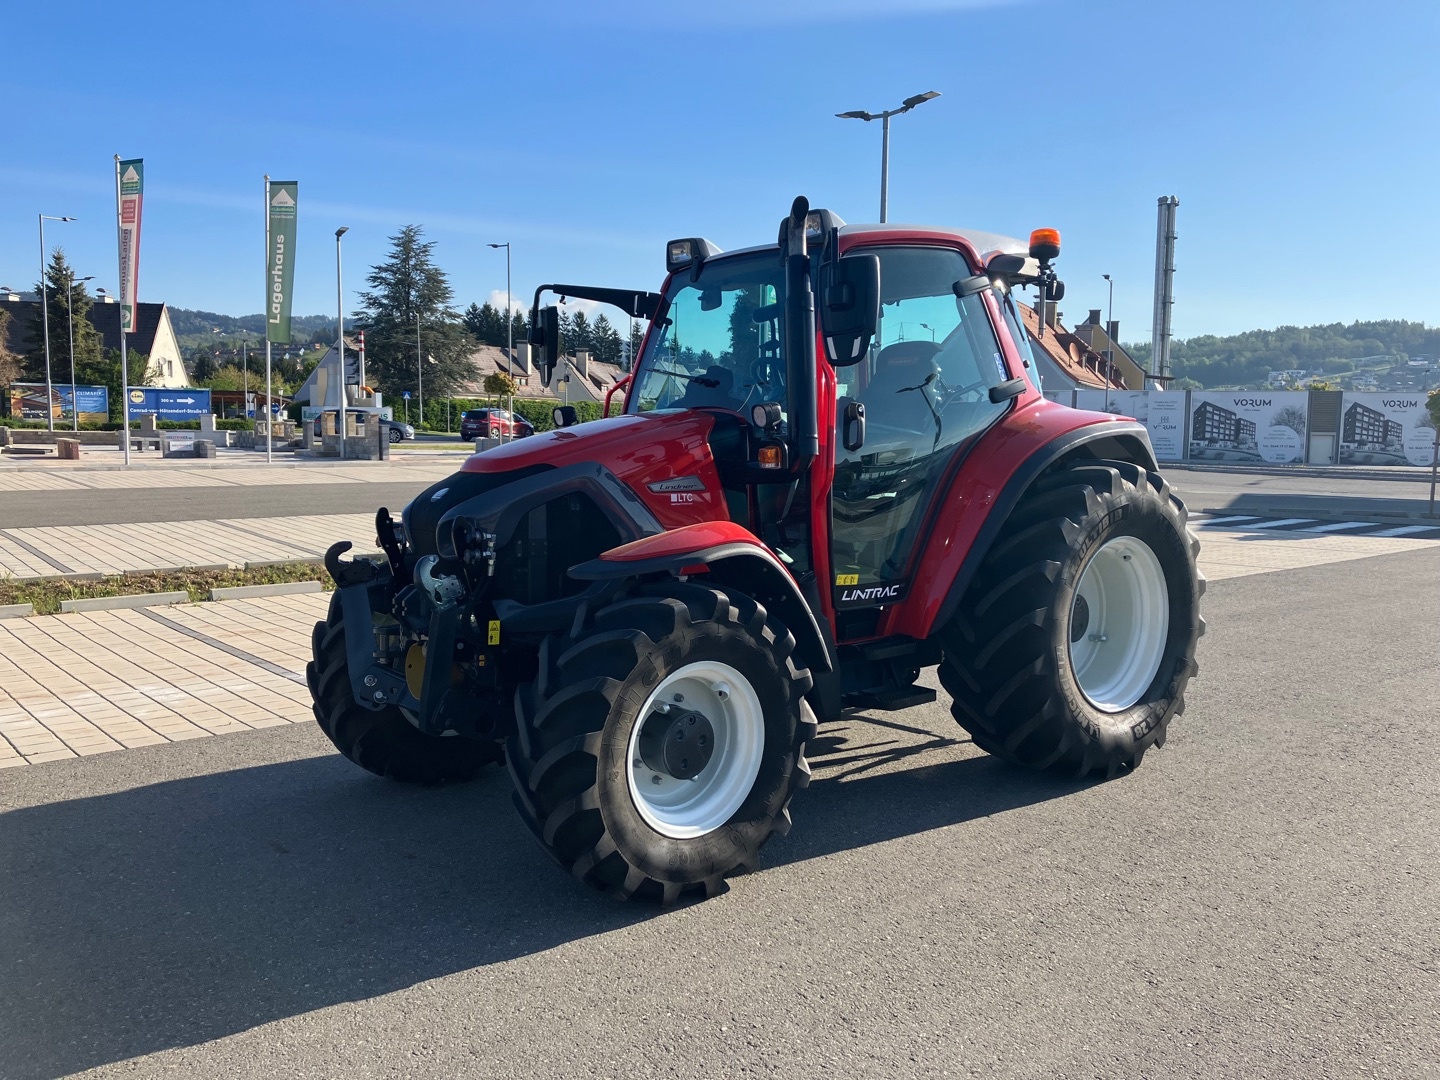 Lindner Lintrac 90 tractor 85.398 €